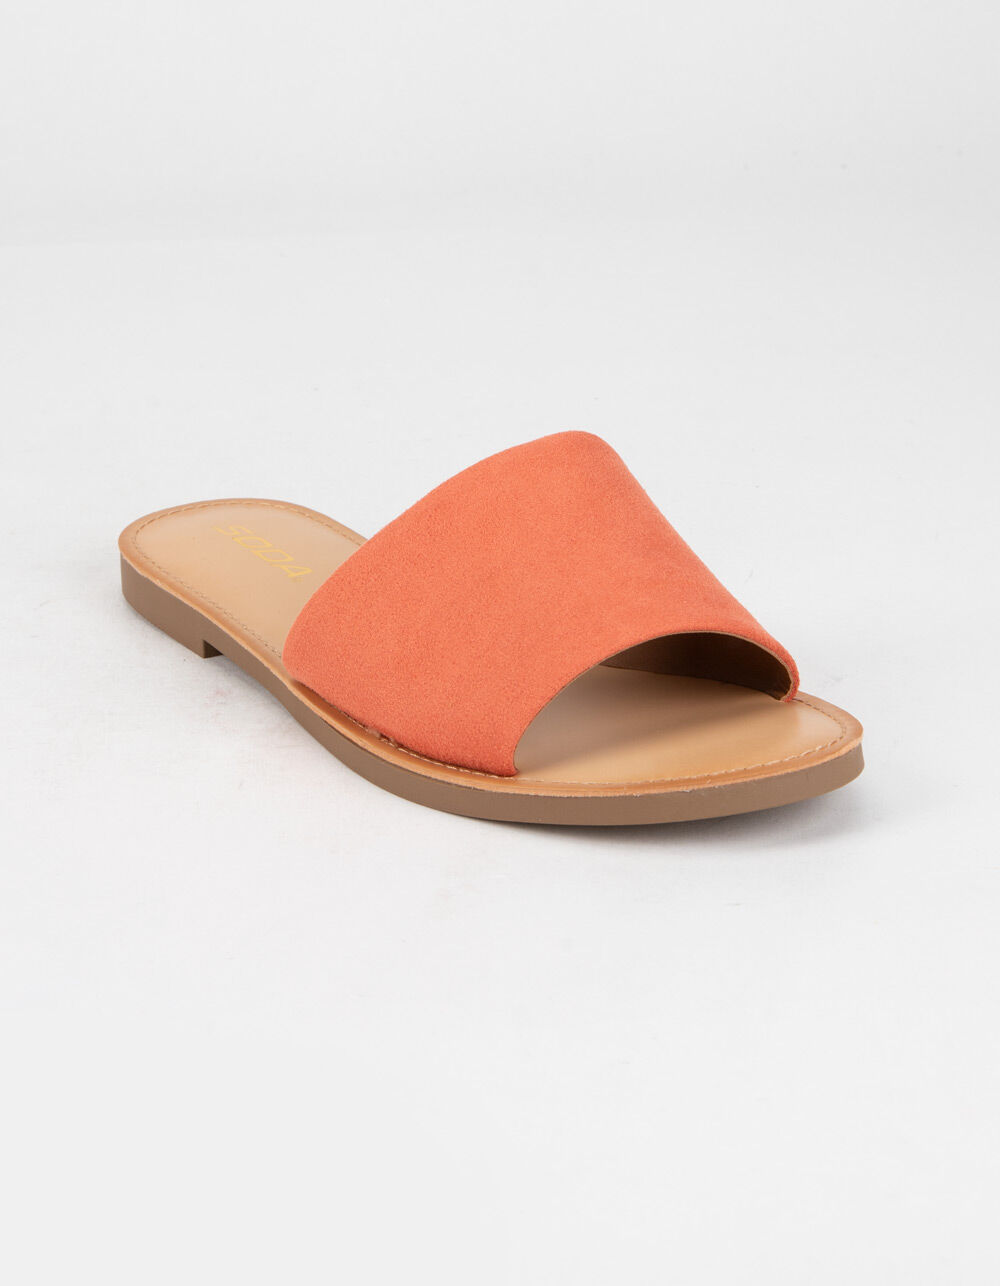 SODA Single Strap Womens Coral Slide Sandals image number 0